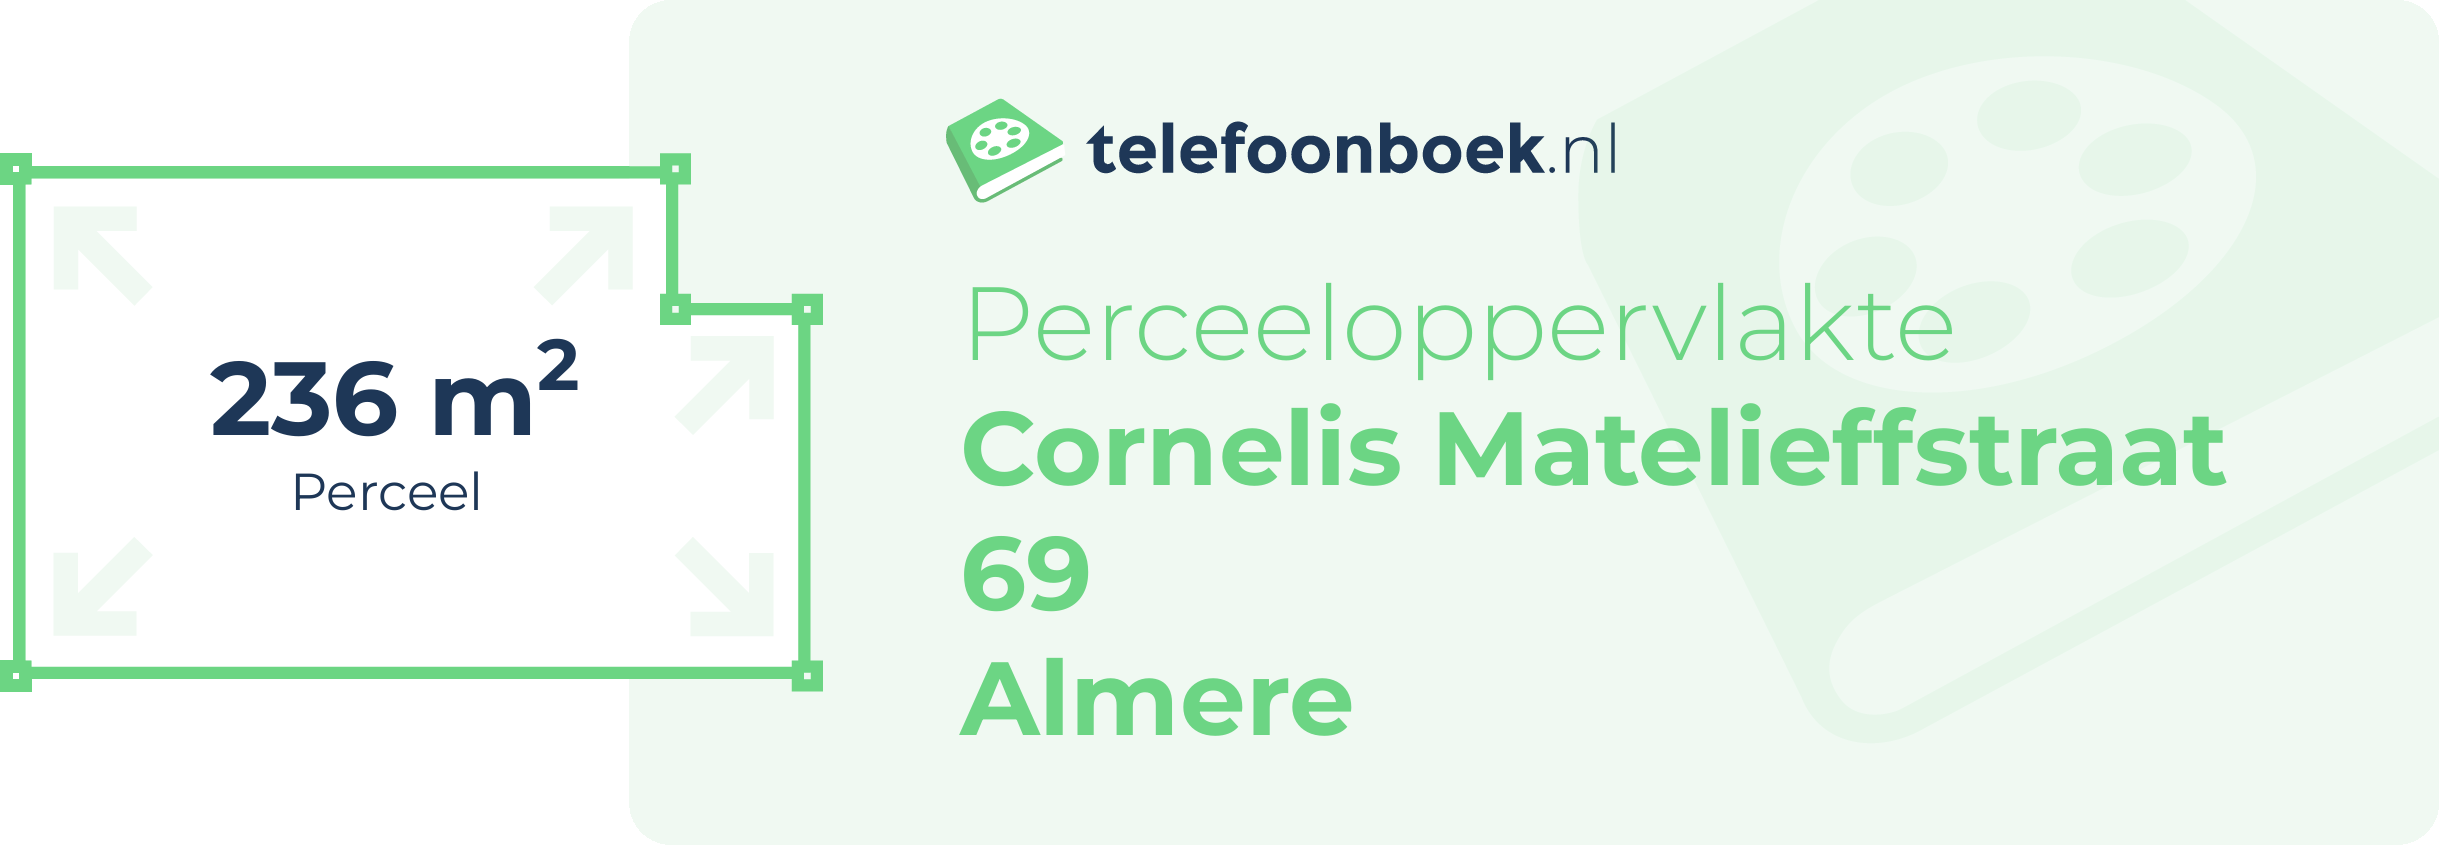 Perceeloppervlakte Cornelis Matelieffstraat 69 Almere